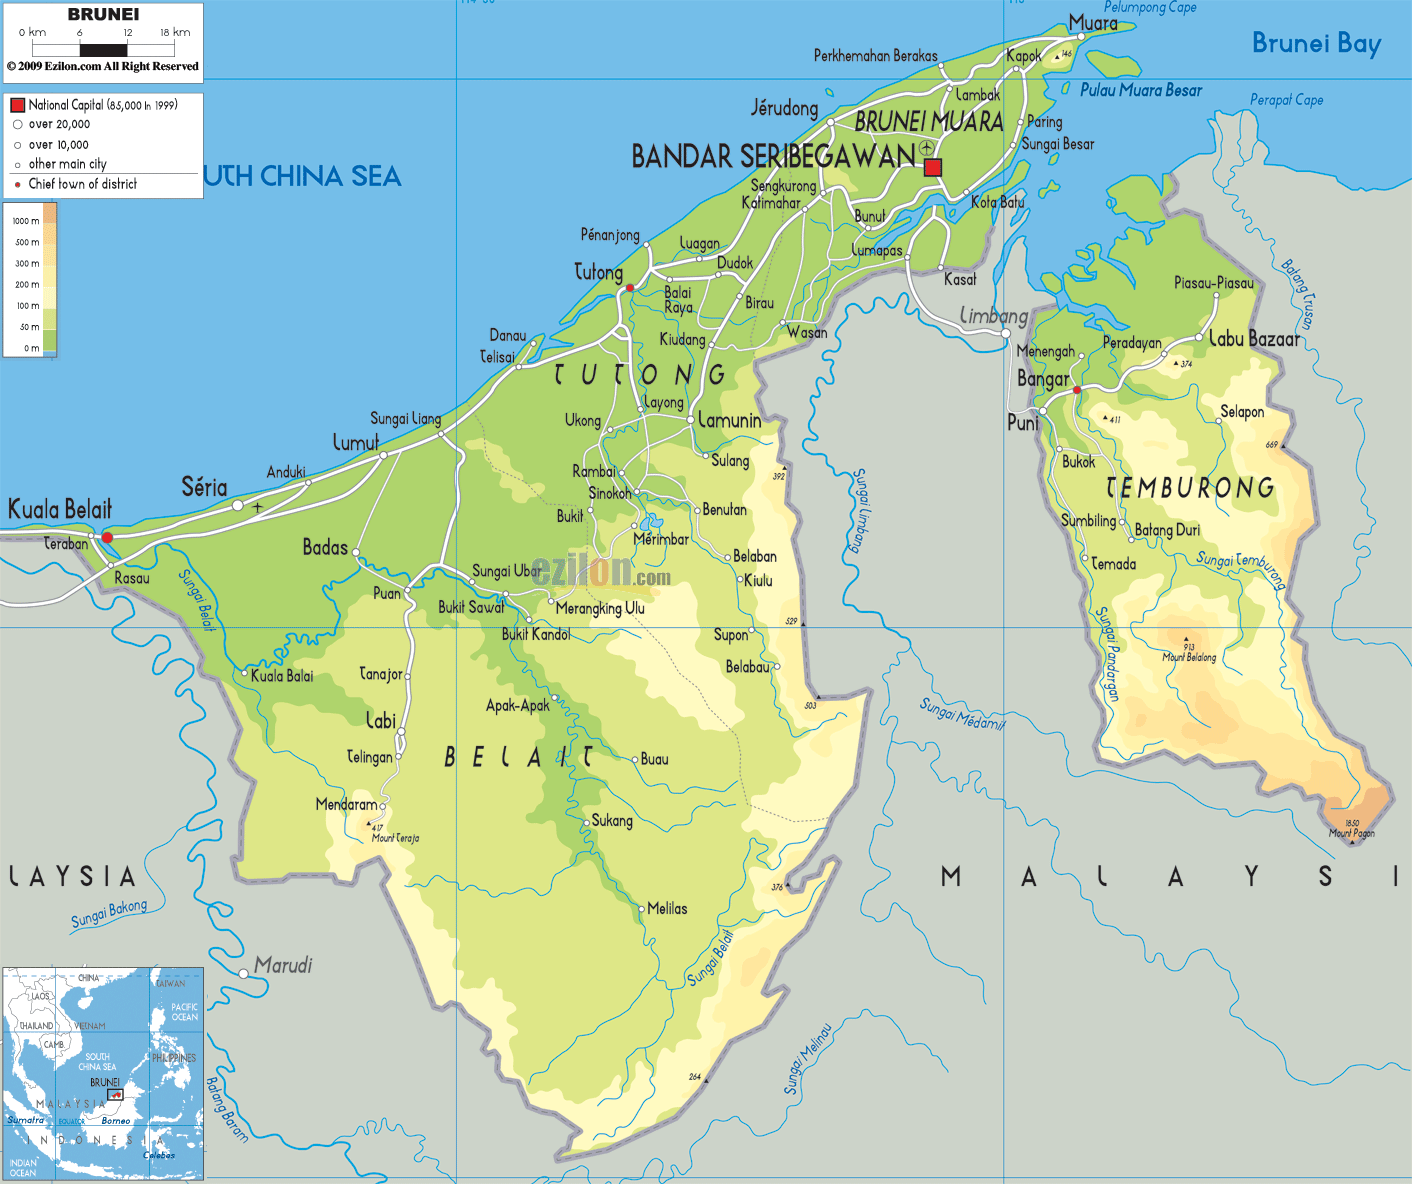 Brunei physique carte